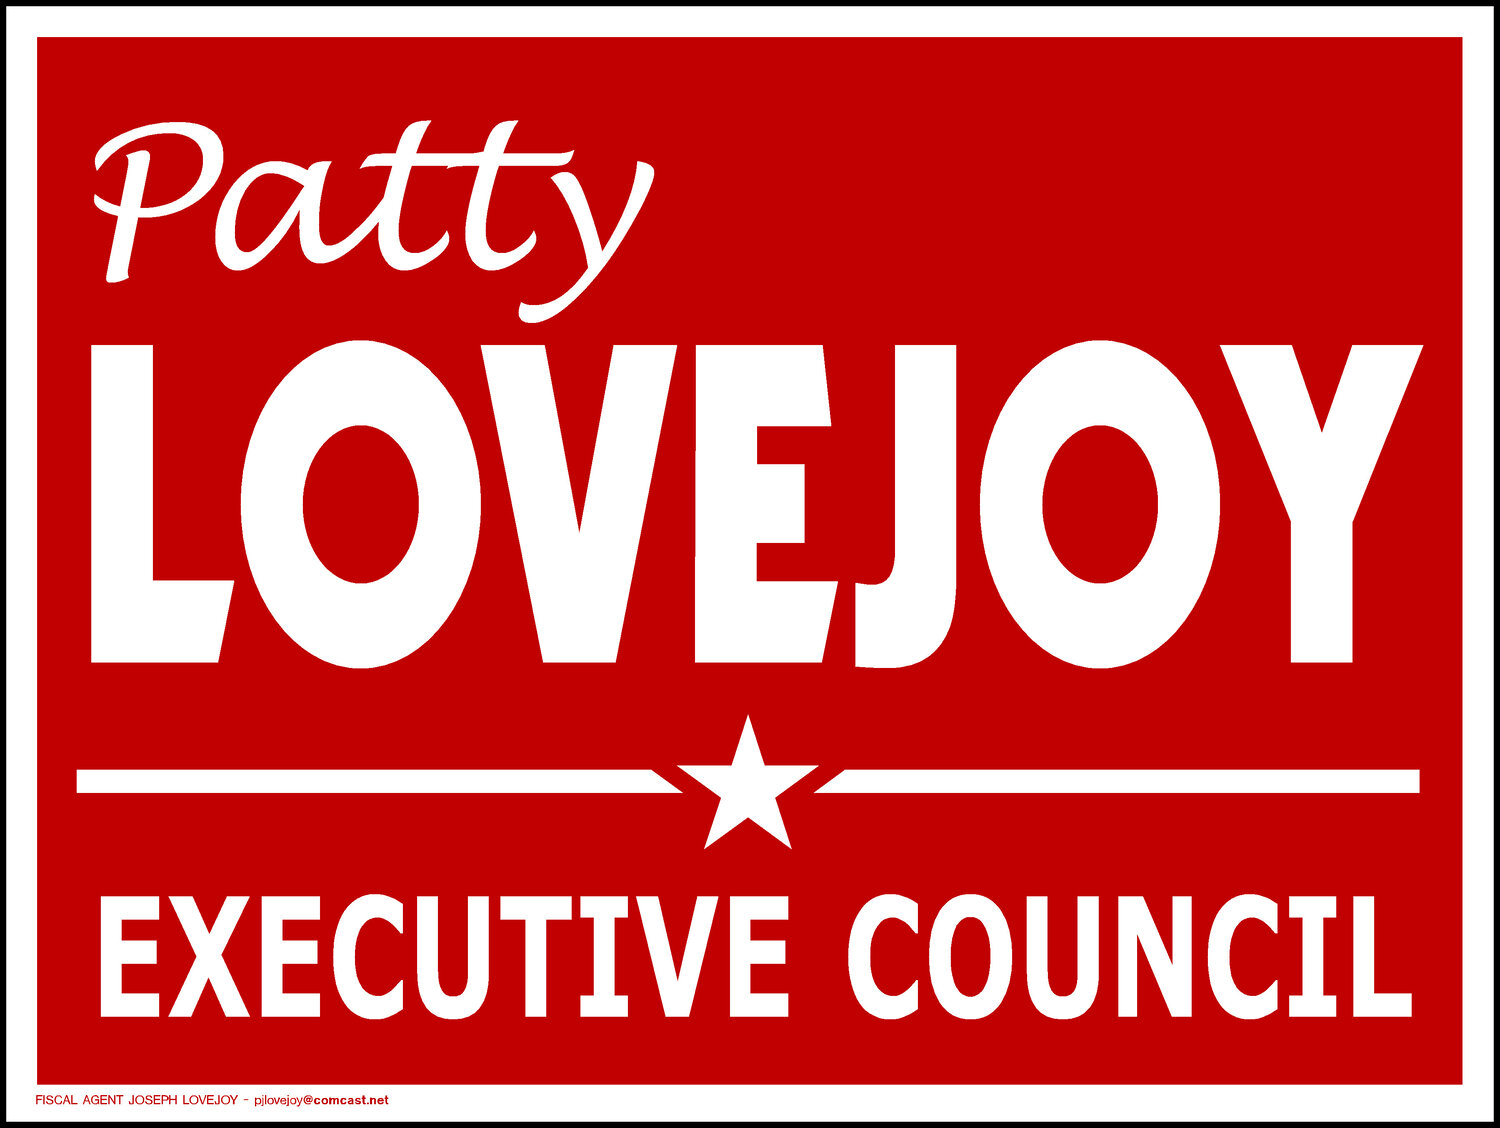 Patty Lovejoy for Executive Council